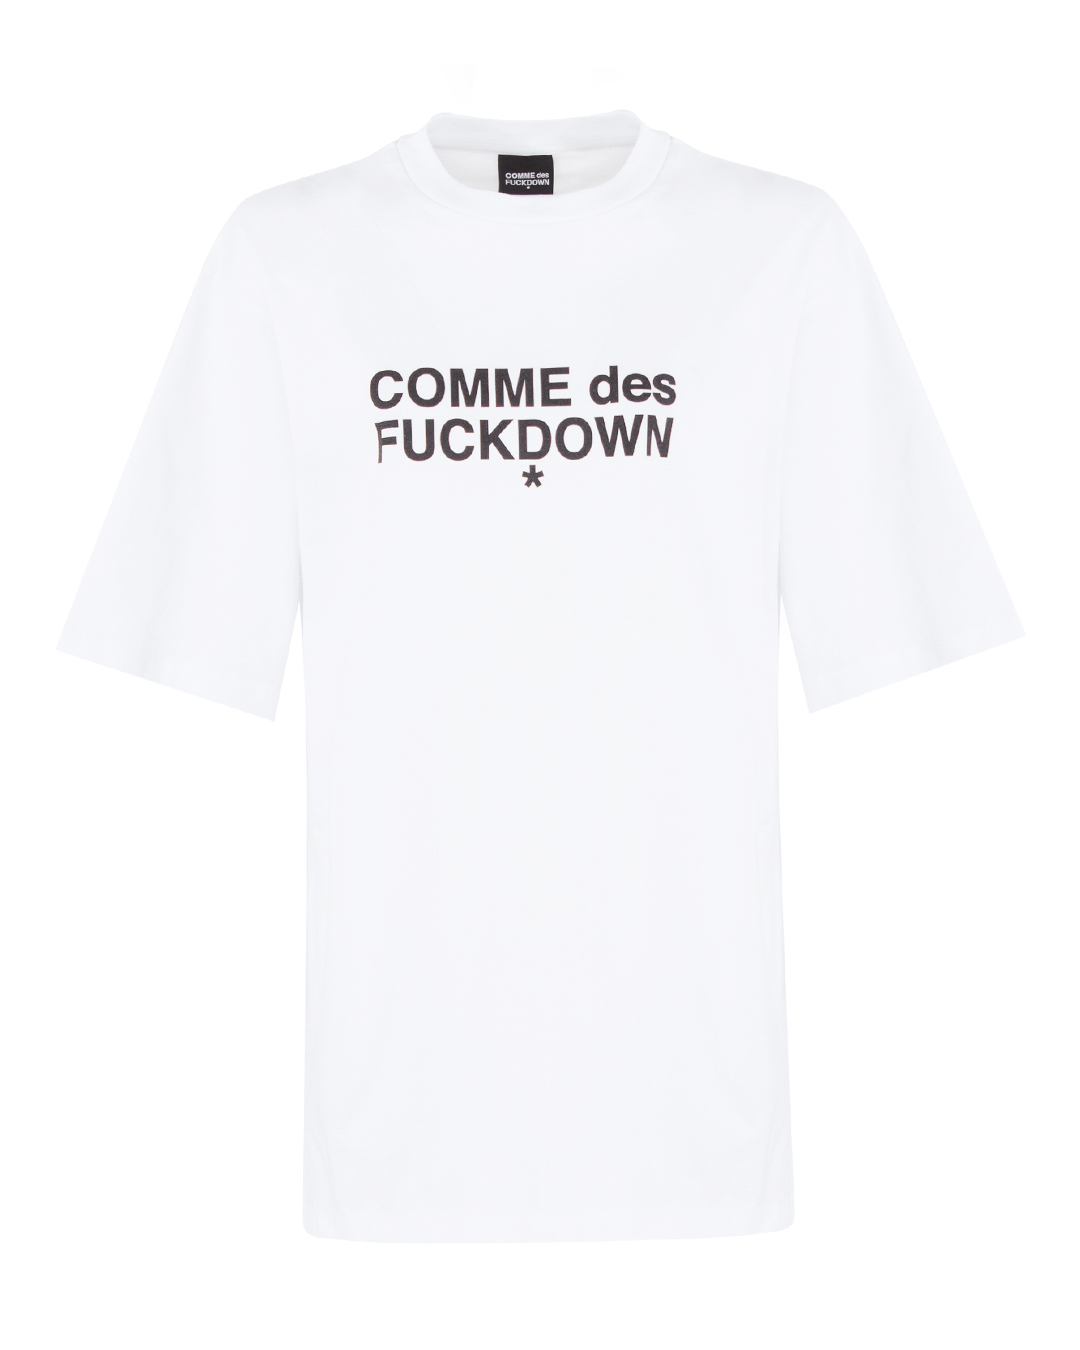 COMME des FUCKDOWN с принтом  артикул CFABW00013 марки COMME des FUCKDOWN купить за 14100 руб.